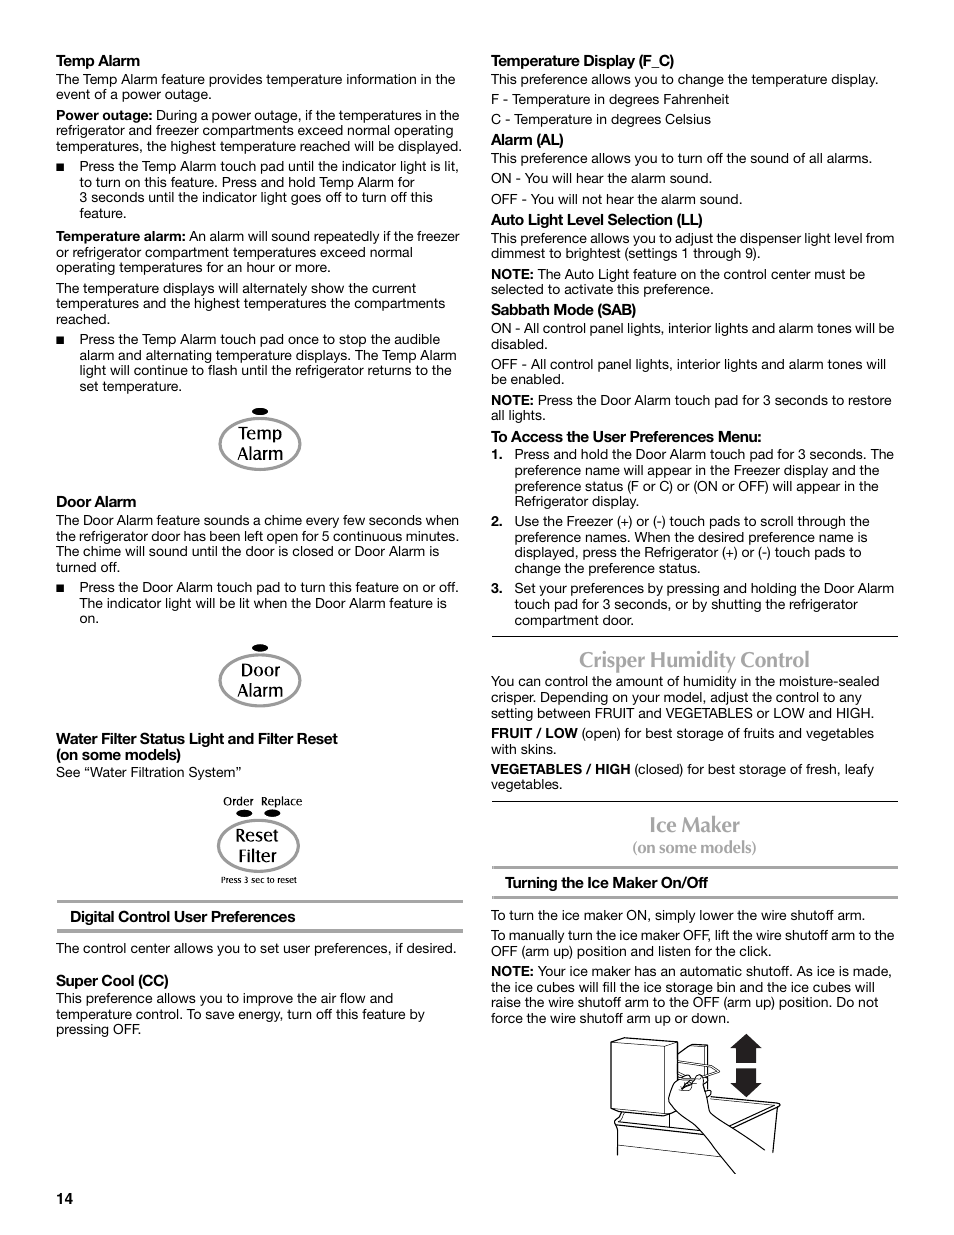 Crisper humidity control, Ice maker | Maytag MBF2562HEW User Manual | Page 14 / 66